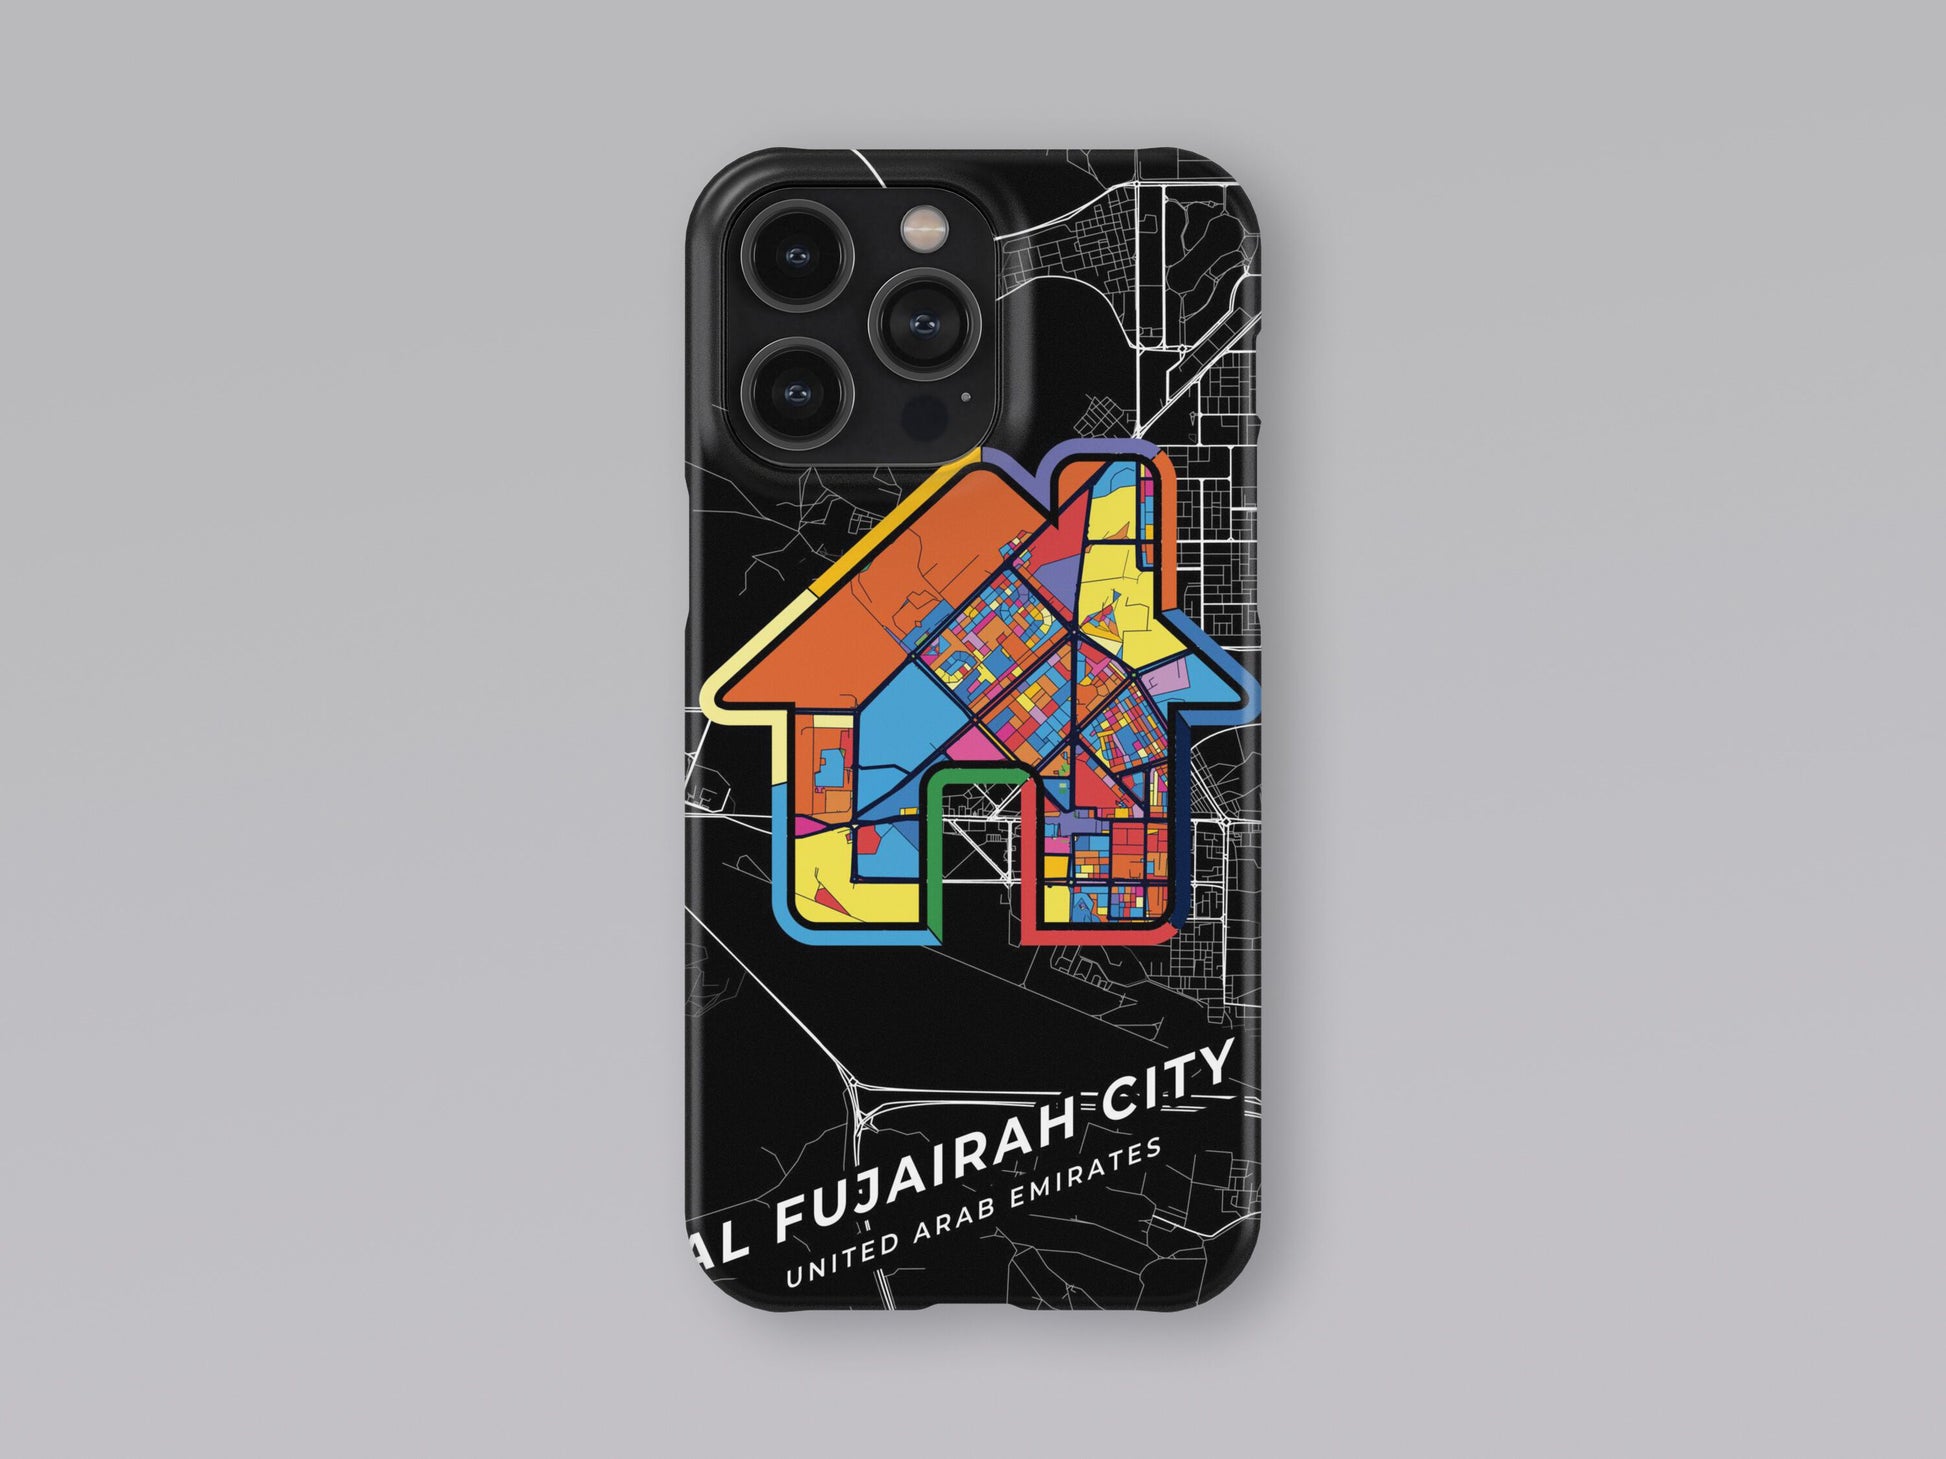 Al Fujairah City United Arab Emirates slim phone case with colorful icon. Birthday, wedding or housewarming gift. Couple match cases. 3